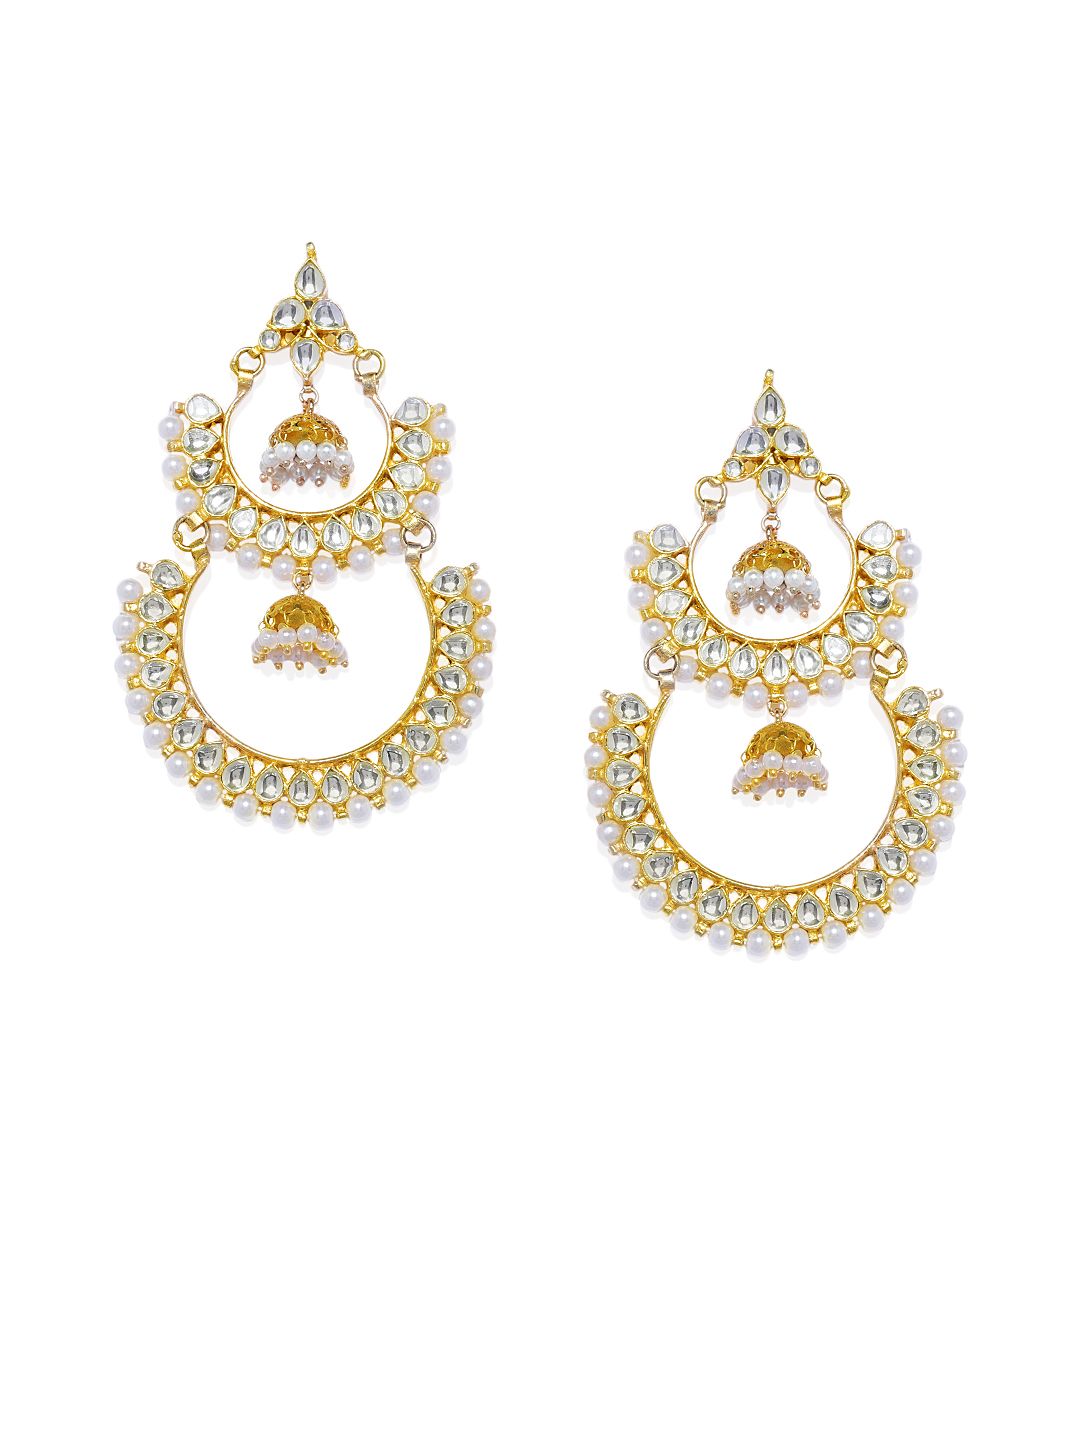 AccessHer Gold-Toned Jadau Kundan Chaandbali Earrings with Pearl Price in India